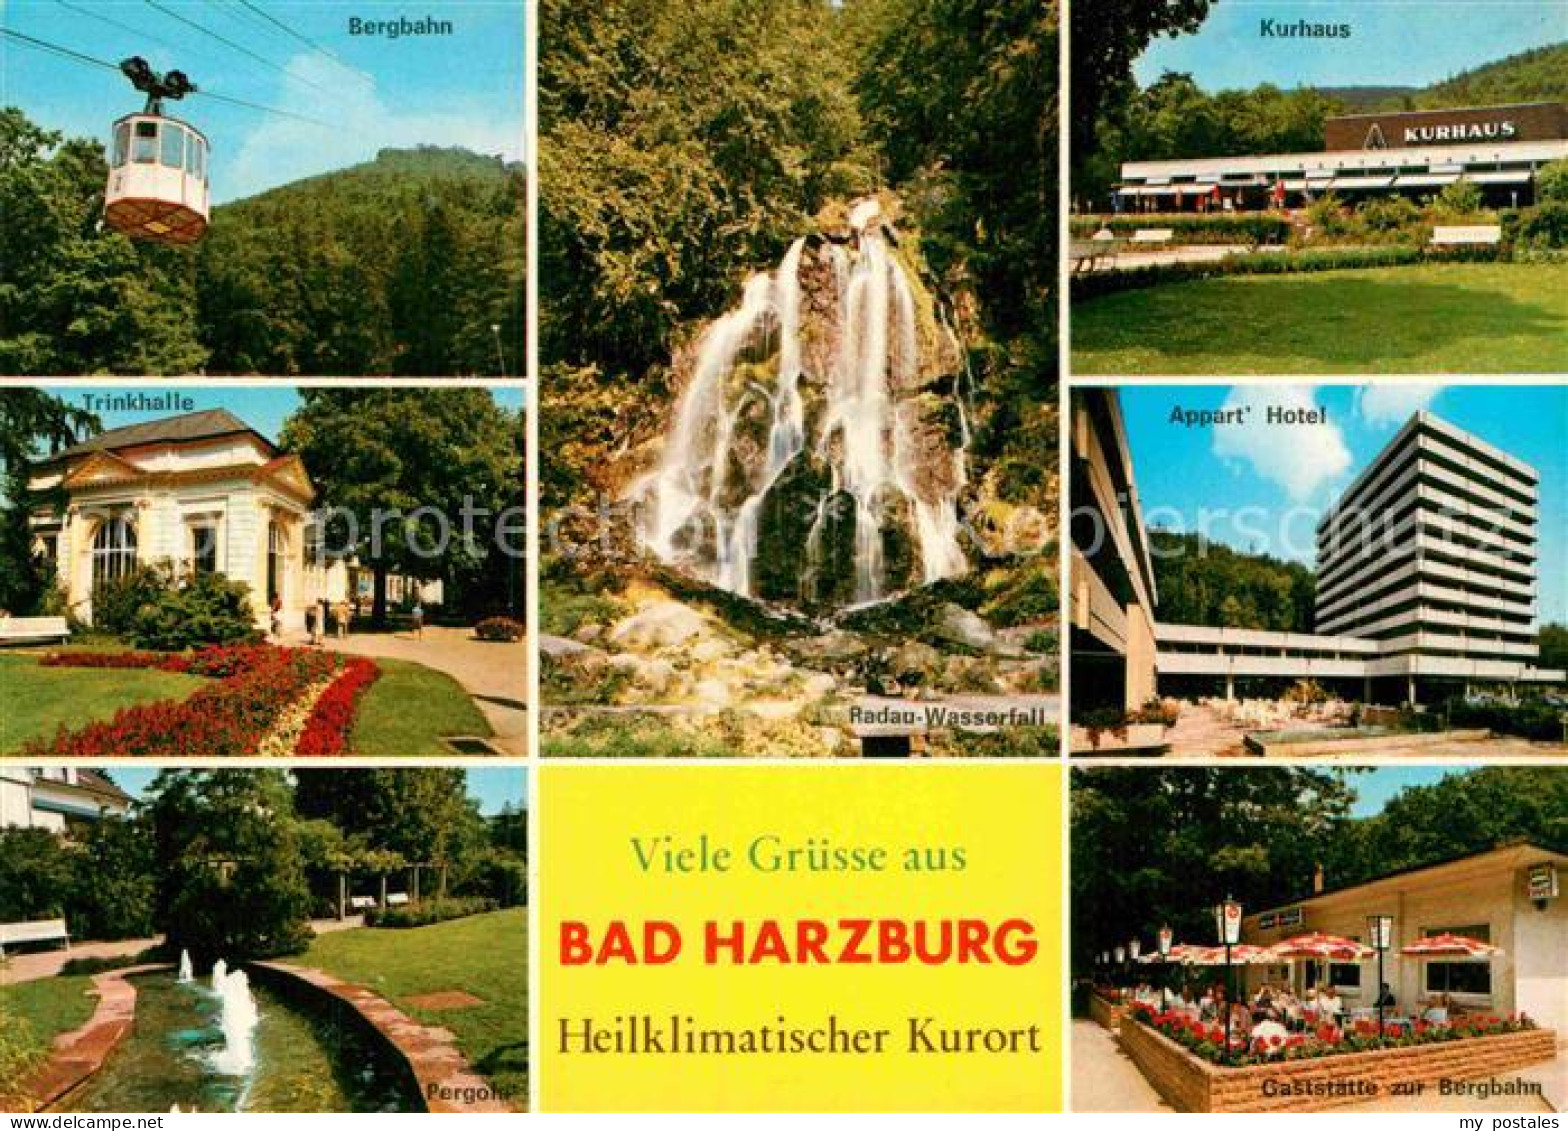 72900840 Bad Harzburg Bergbahn Kurhaus Trinkhalle Radau Wasserfall Apparthotel P - Bad Harzburg